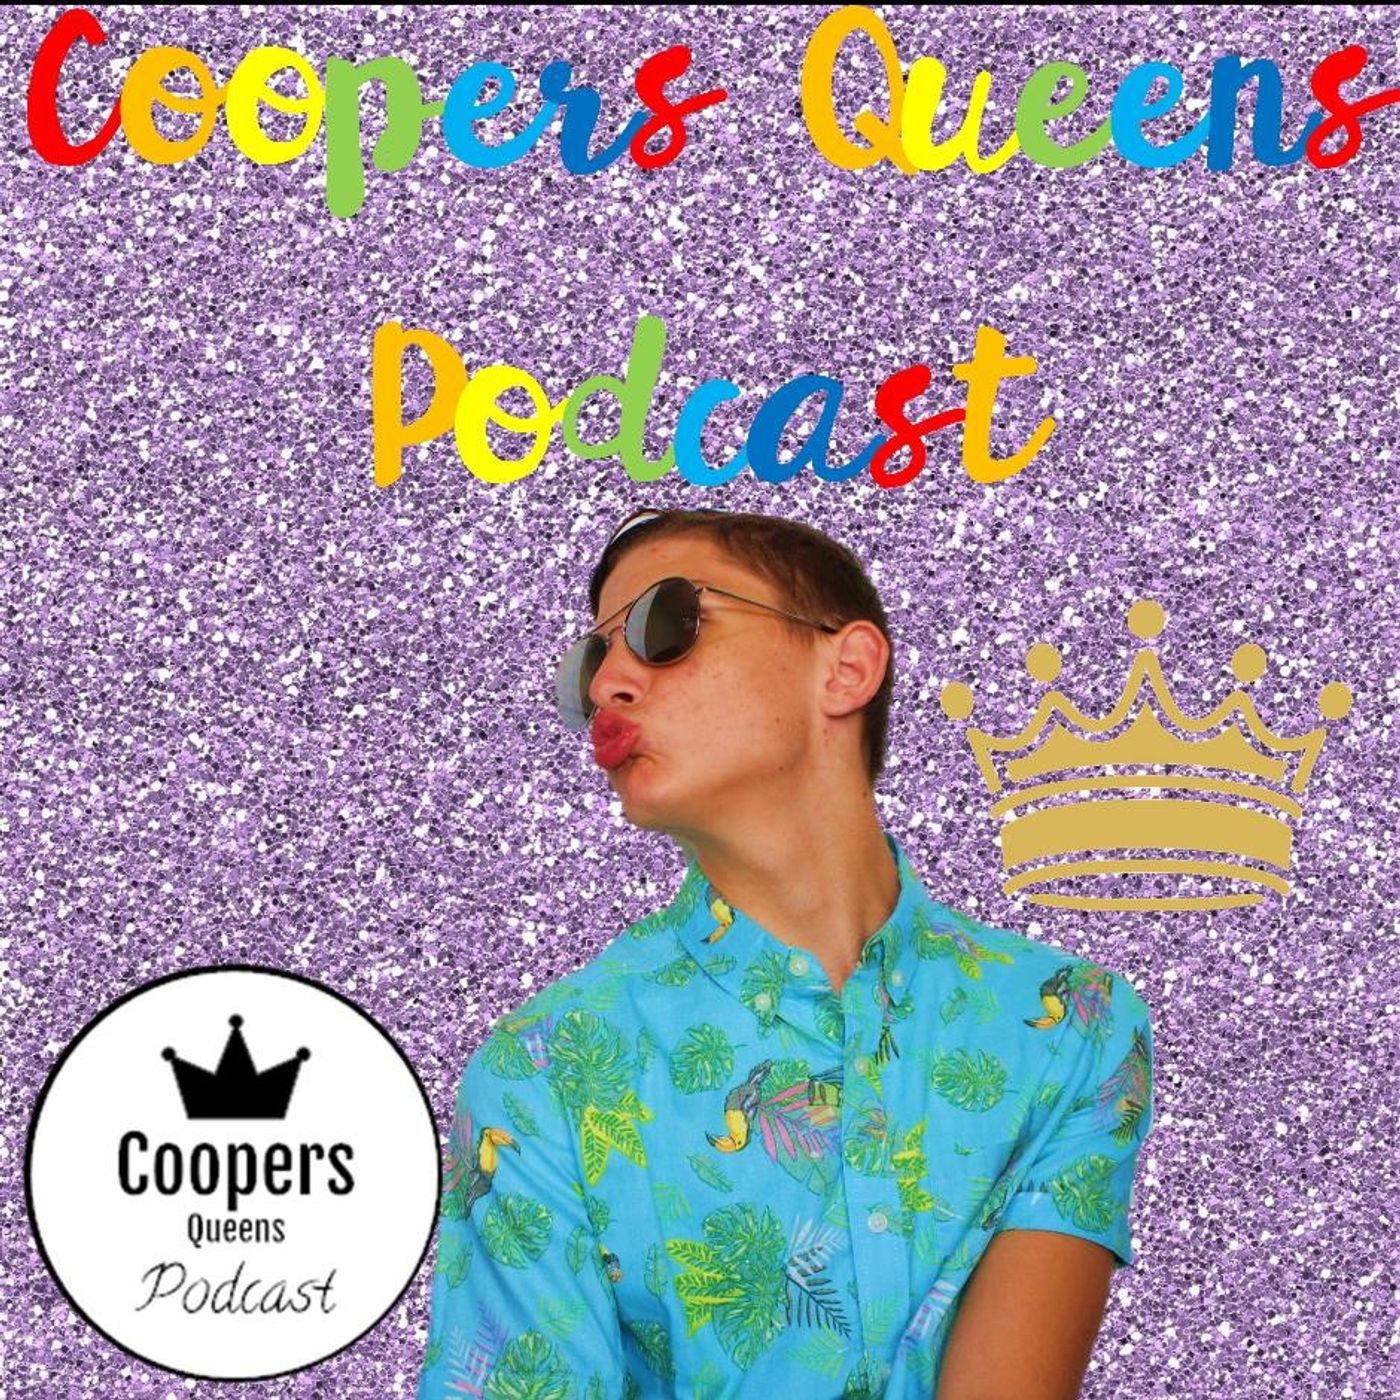 Coopers Queens Podcast